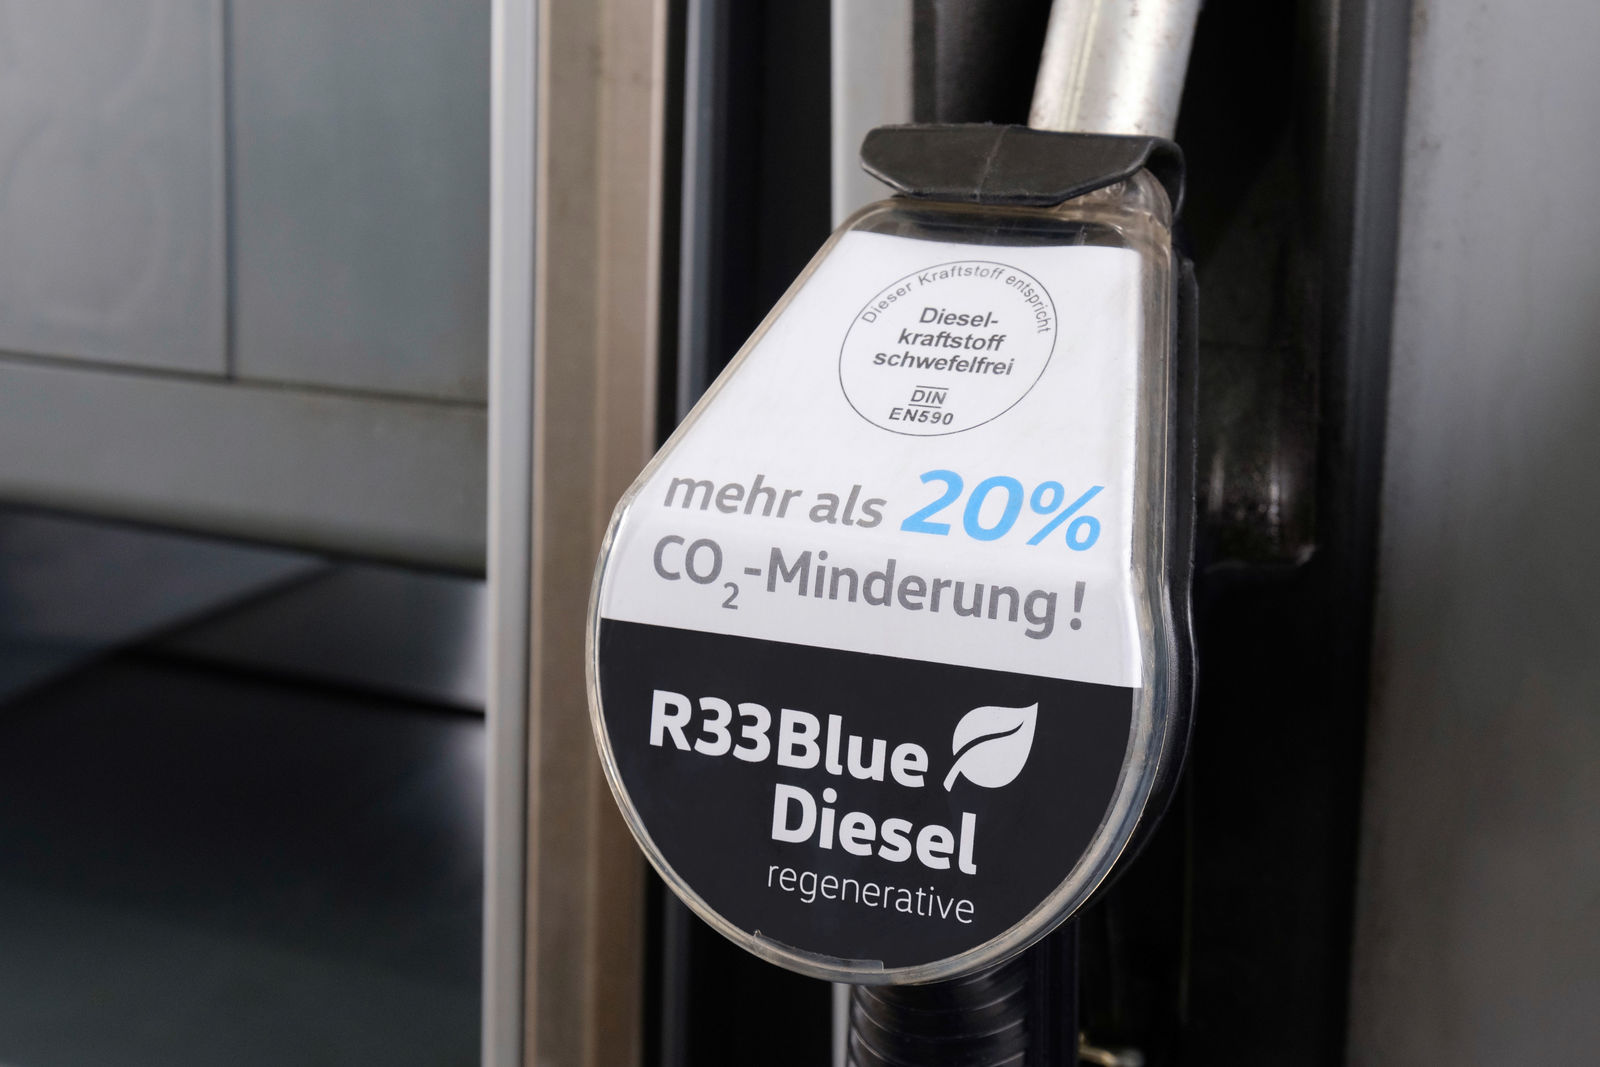 New regenerative R33 BlueDiesel fuel helps reduce CO2 emissions of fleets